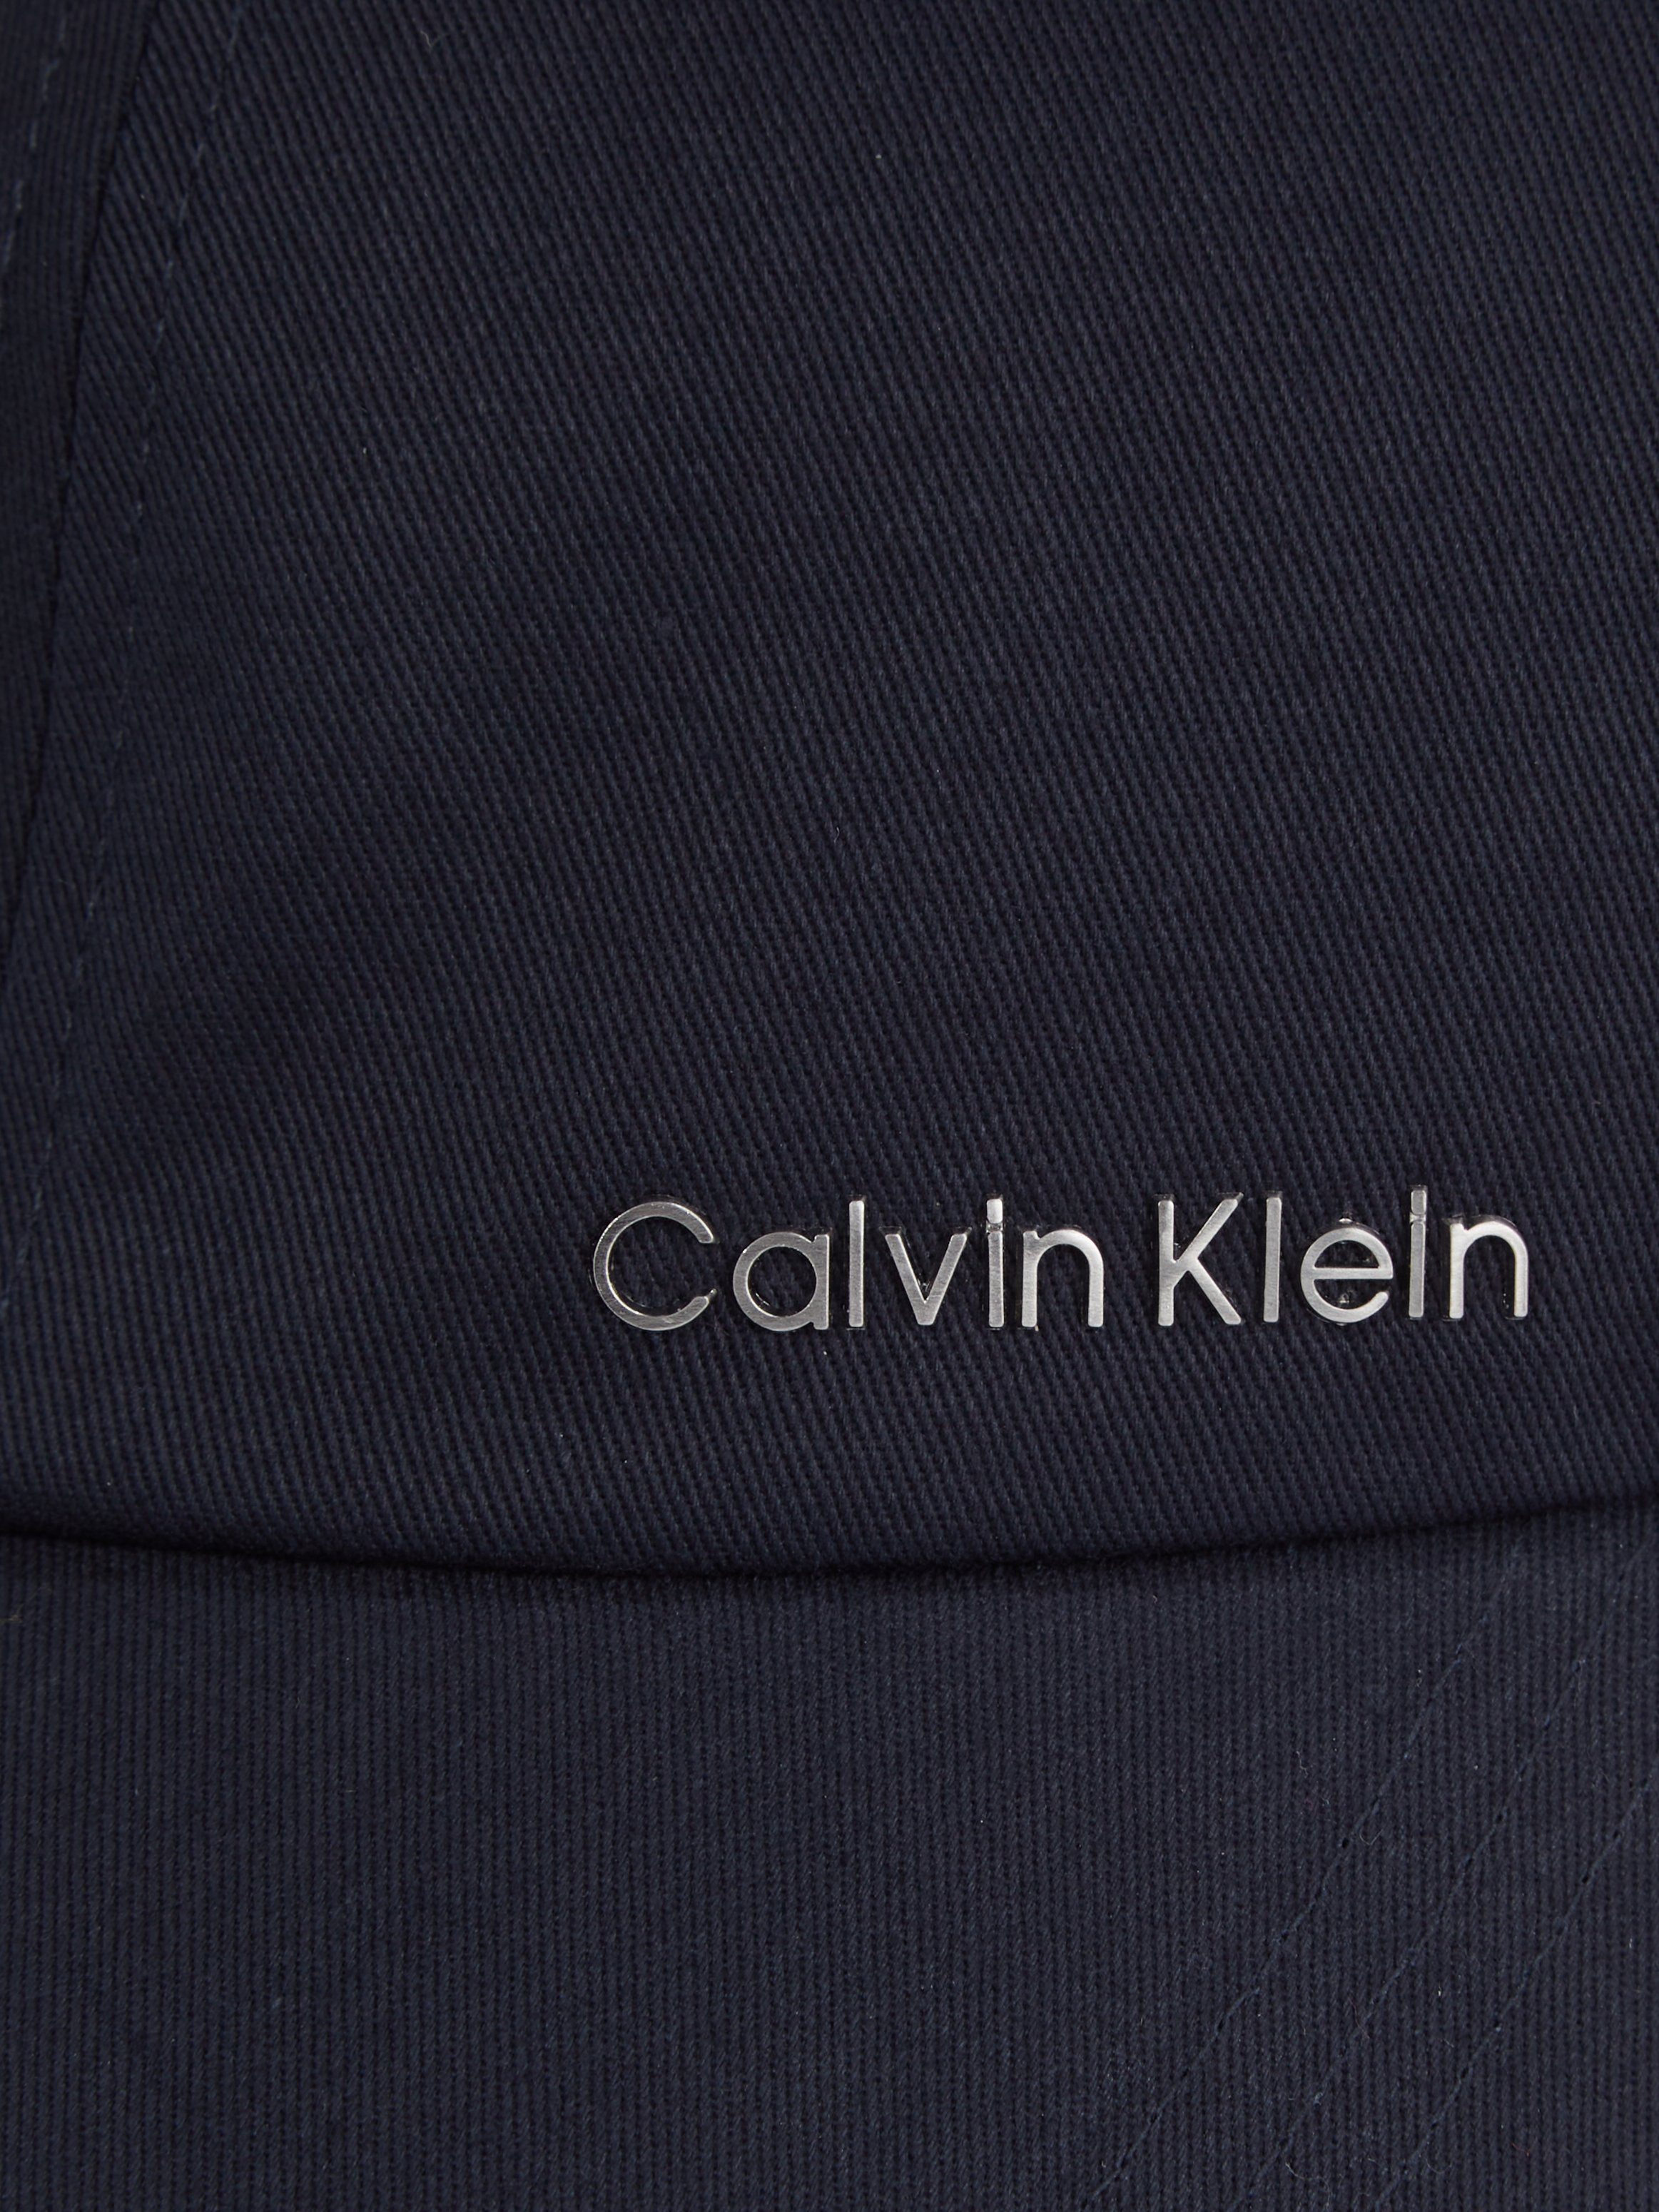 METAL Baseball Calvin Ck Navy CAP LETTERING Klein BB Cap